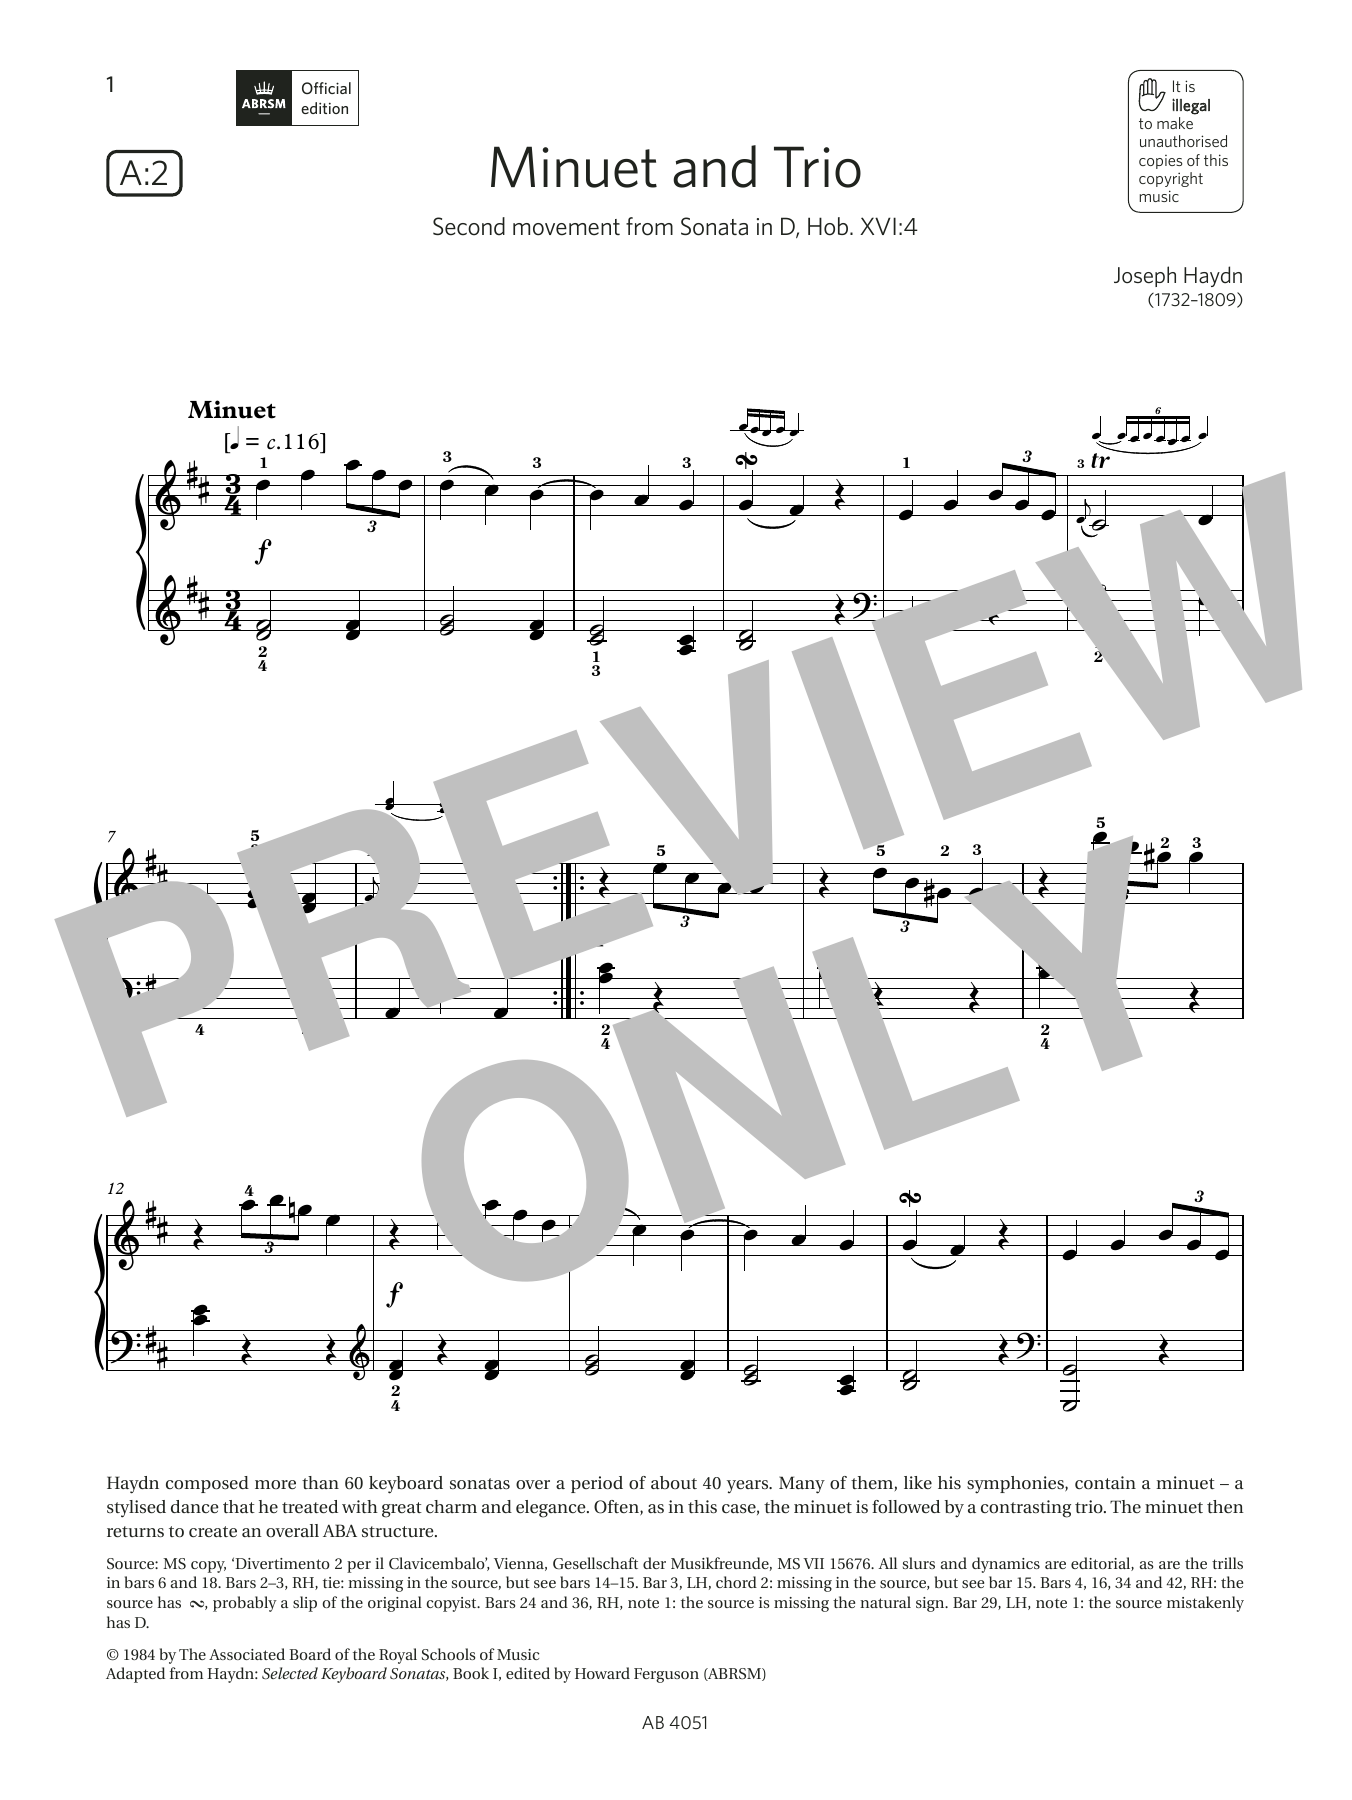 Download Joseph Haydn Minuet and Trio (Grade 5, list A2, from Sheet Music